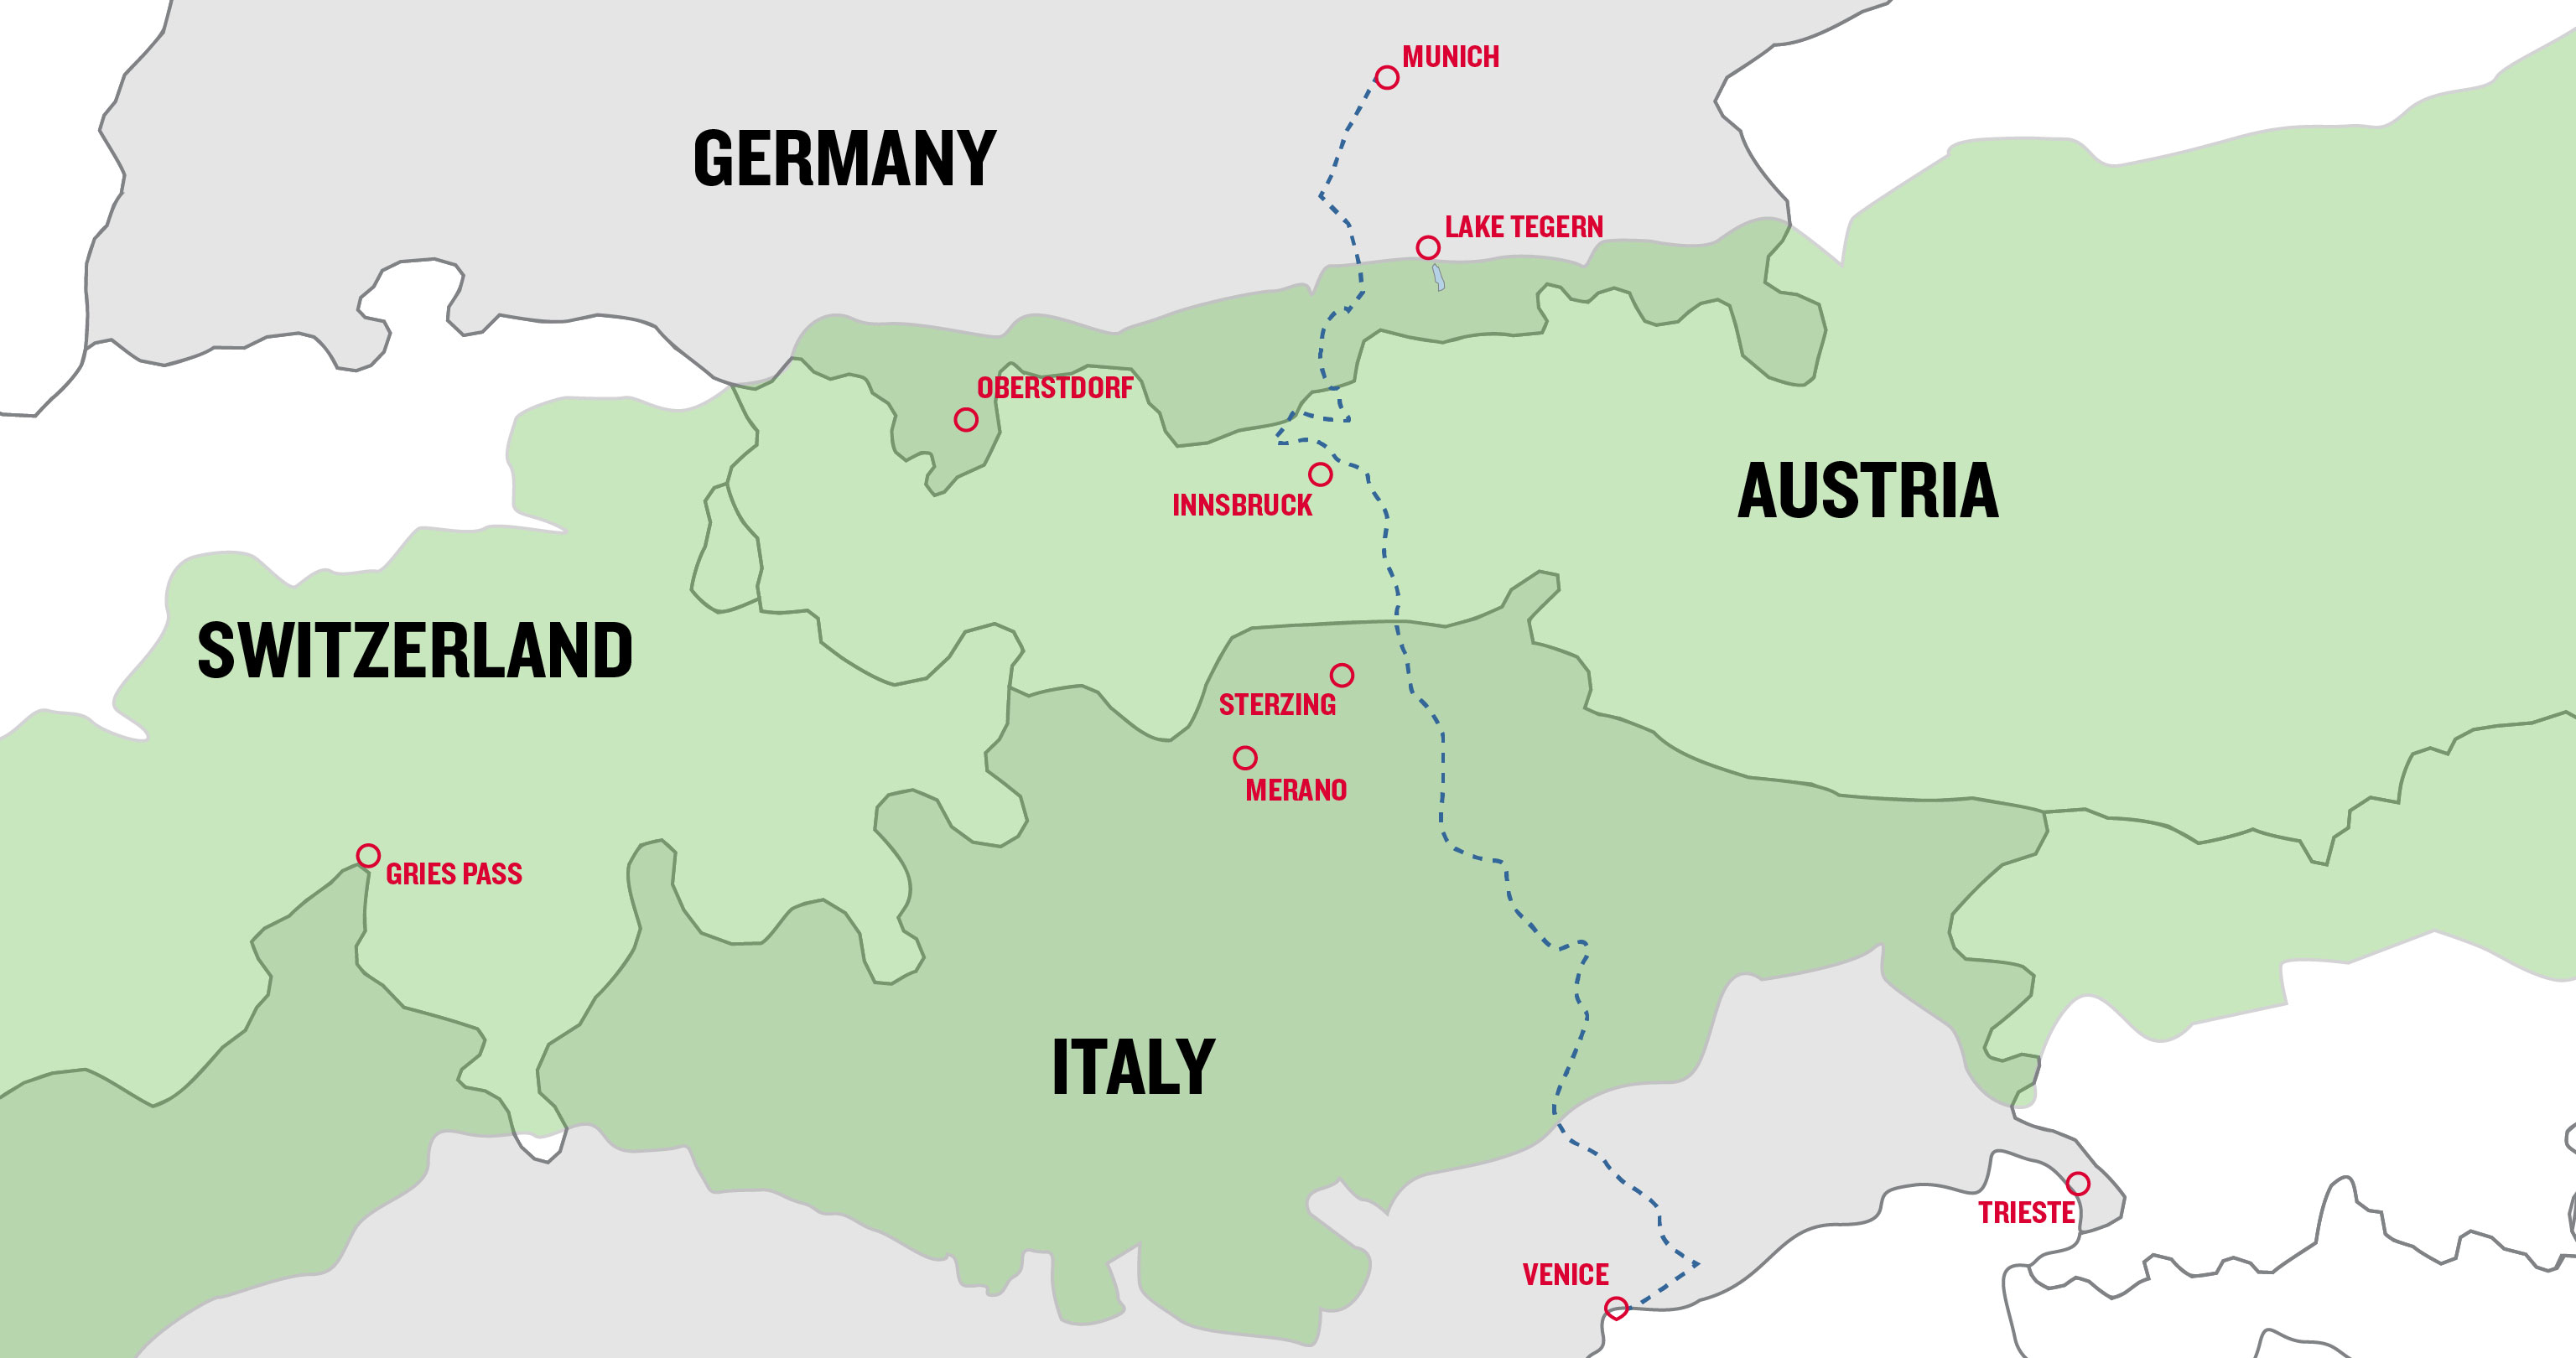 Map of the Munich-Venice Alpine crossing